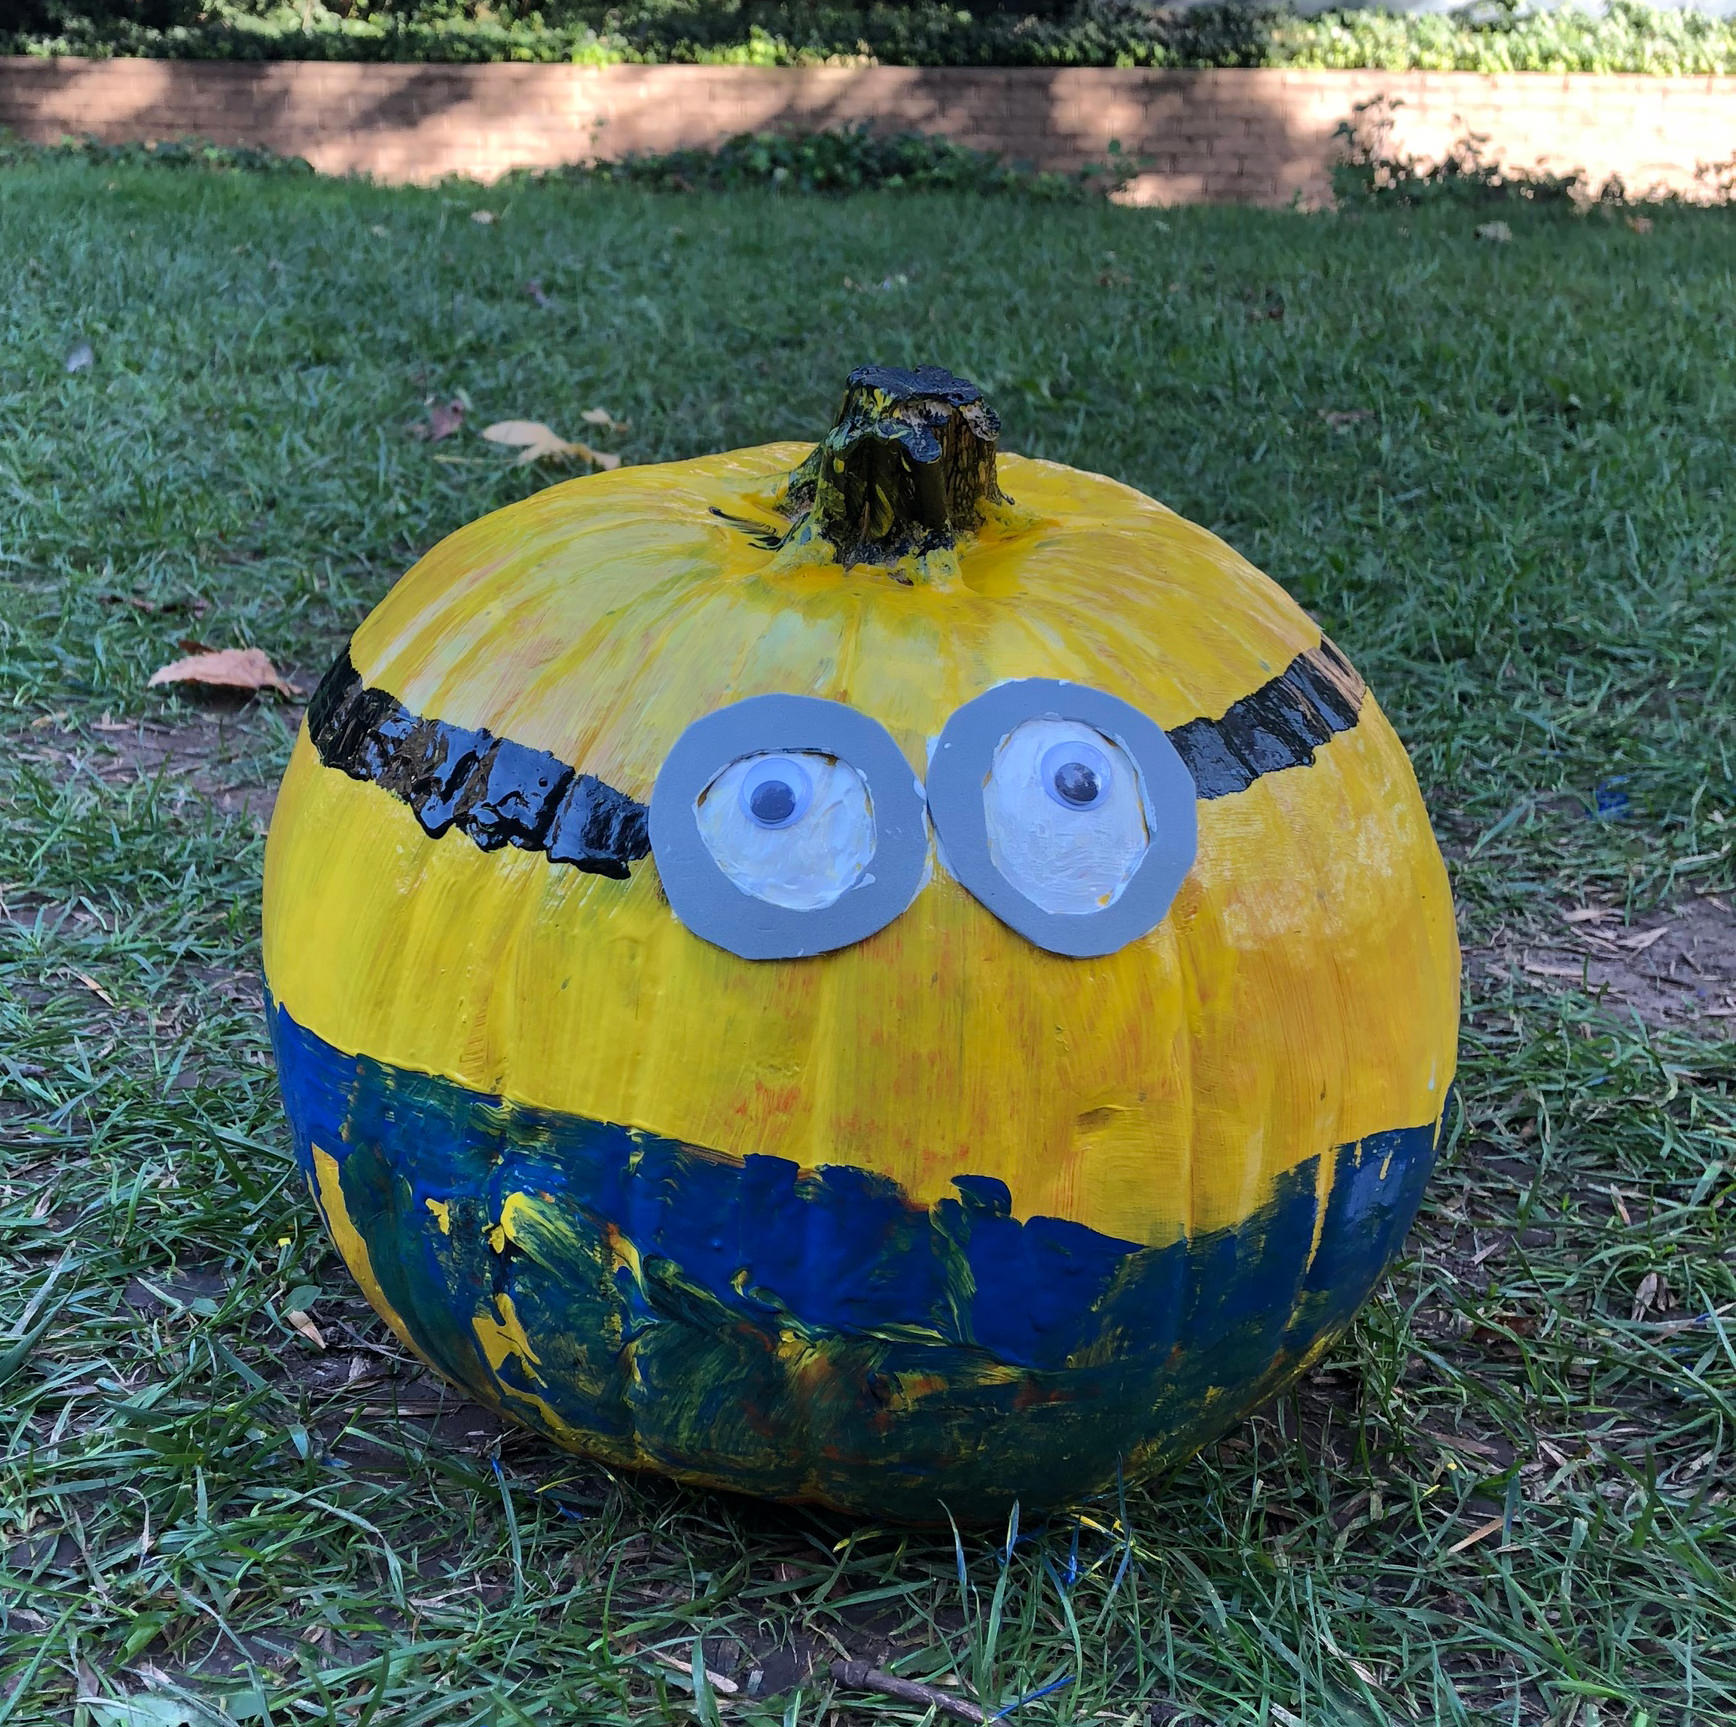 A rough start leads to a happy pumpkin